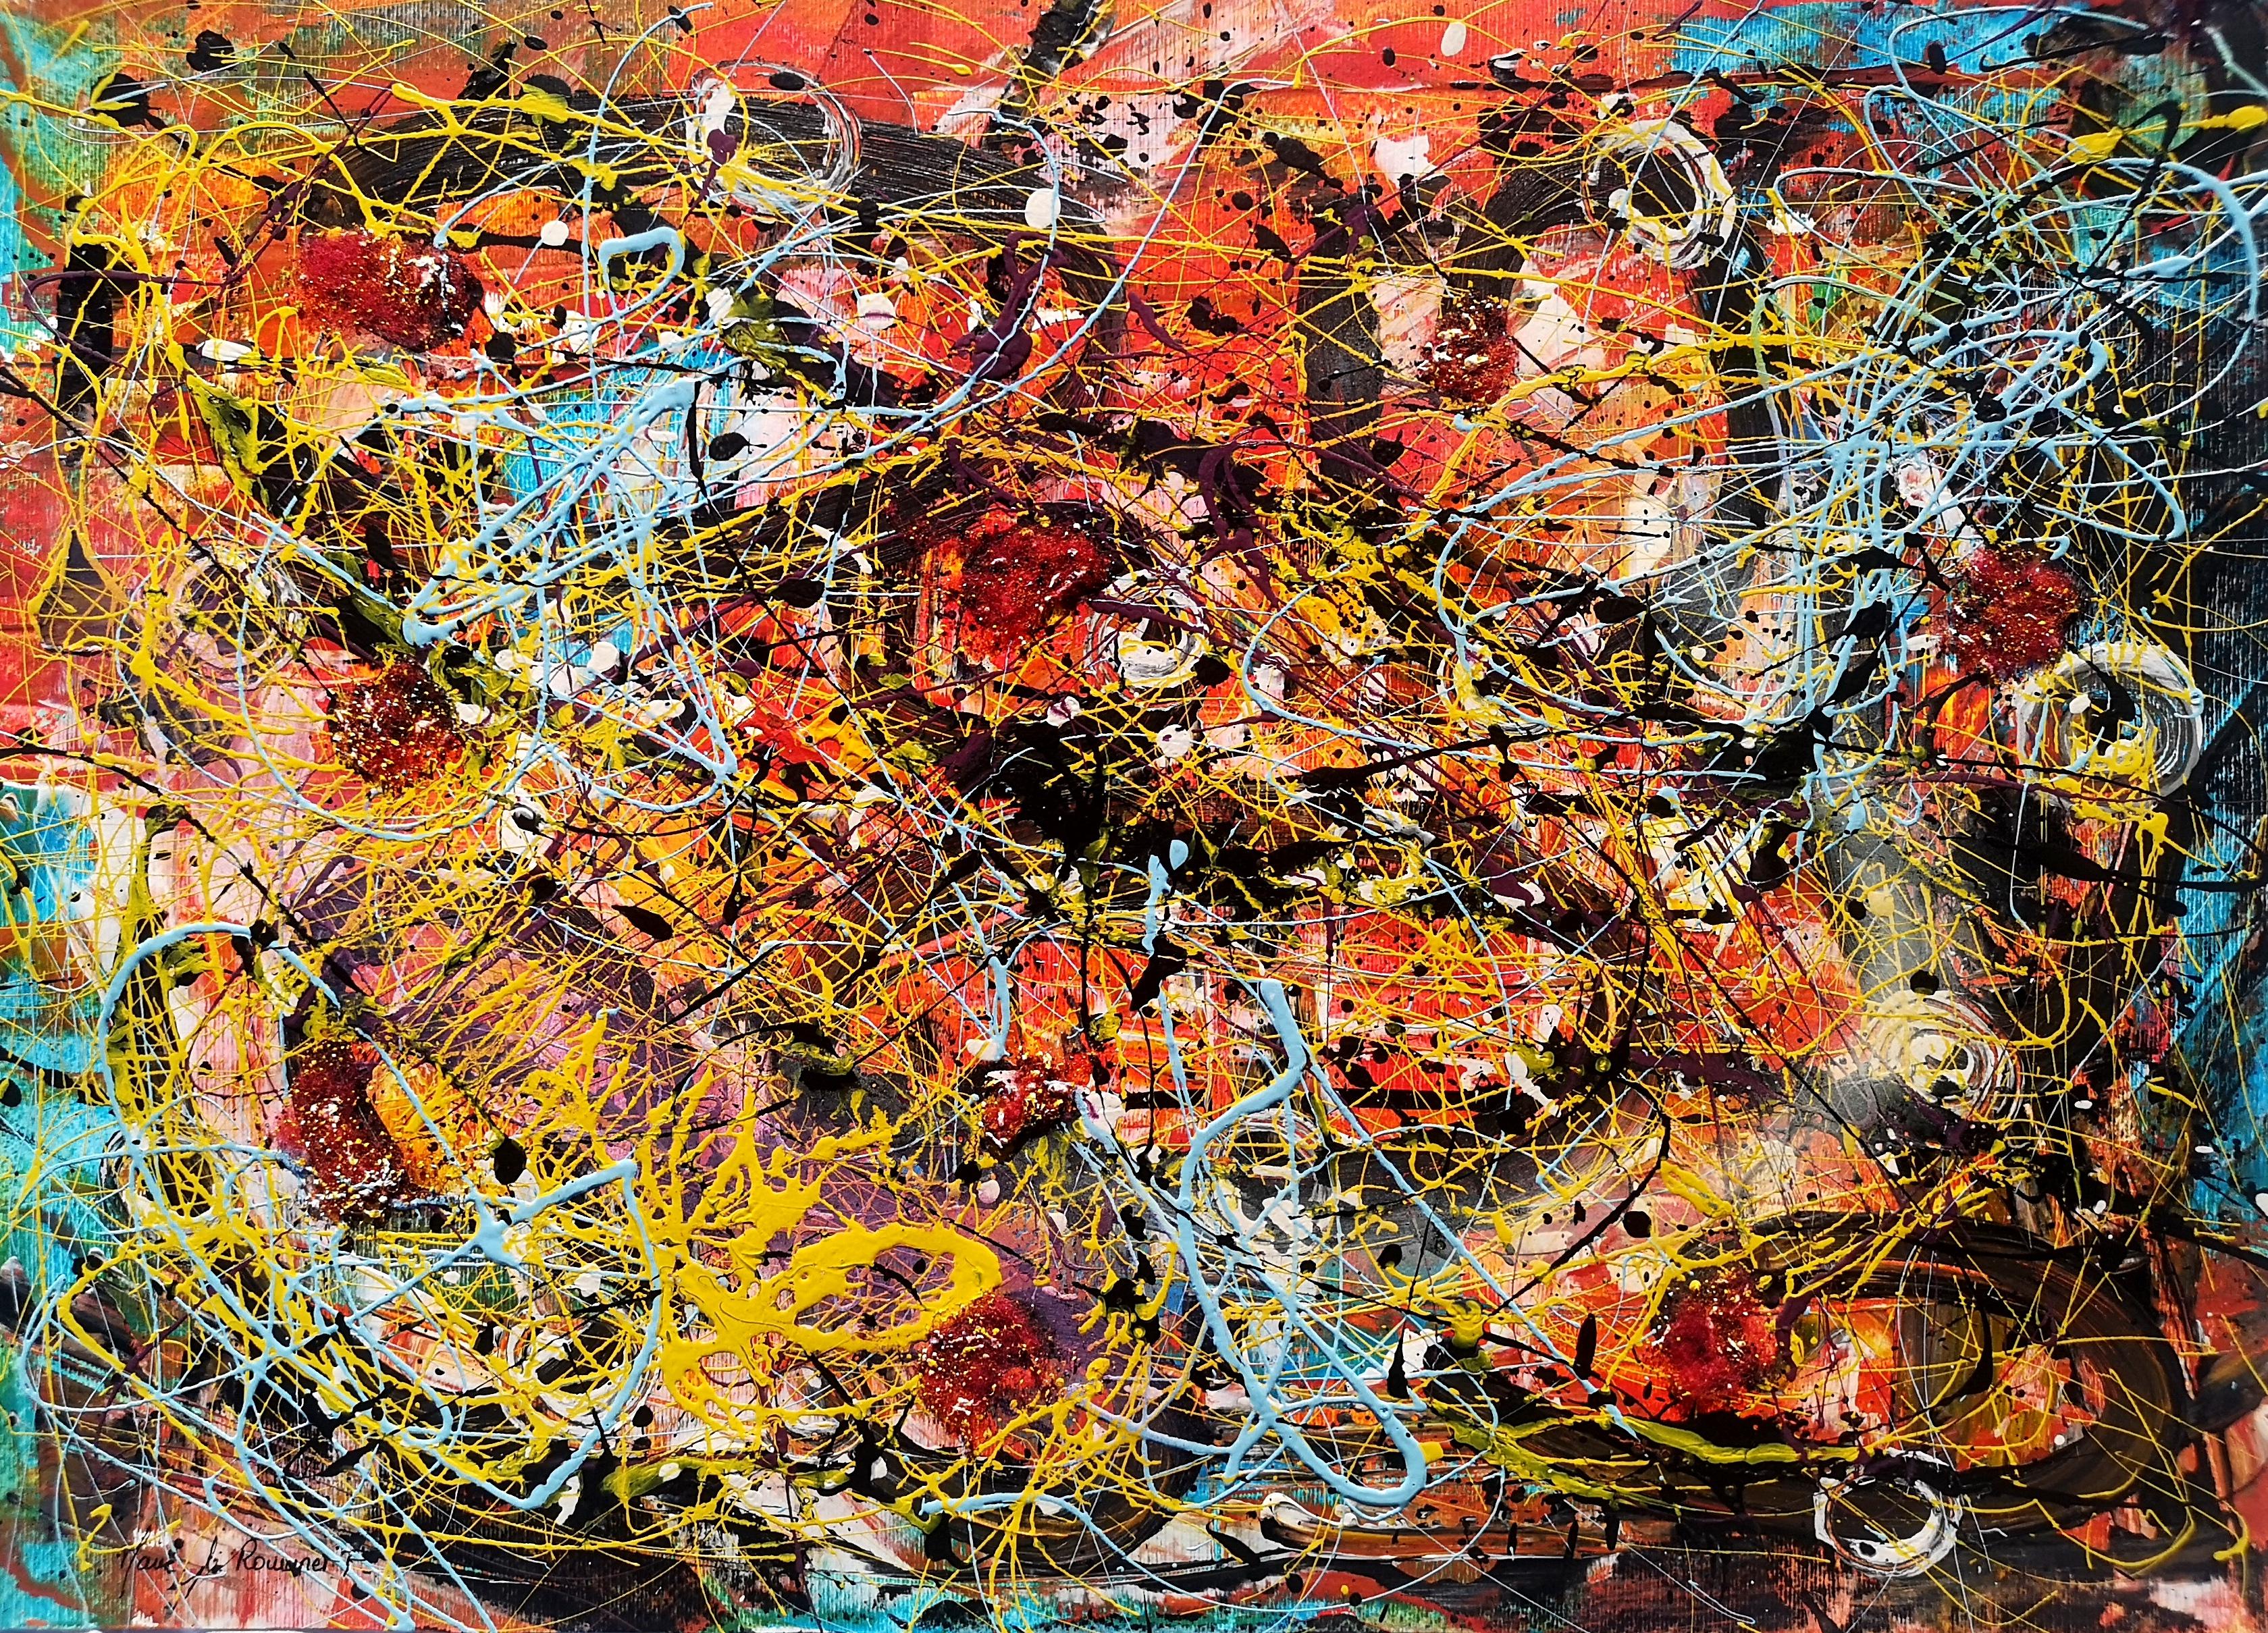 Abstract Painting Marie-Laure Romanet Prin company - « L'AU DELA DES MOTS »  Le style Pollock